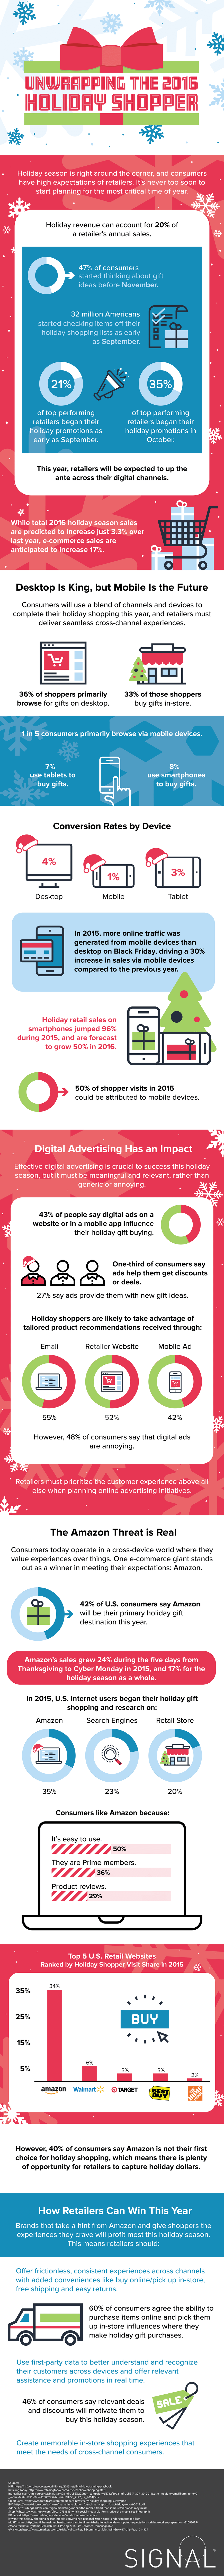 holiday-marketing-infographic